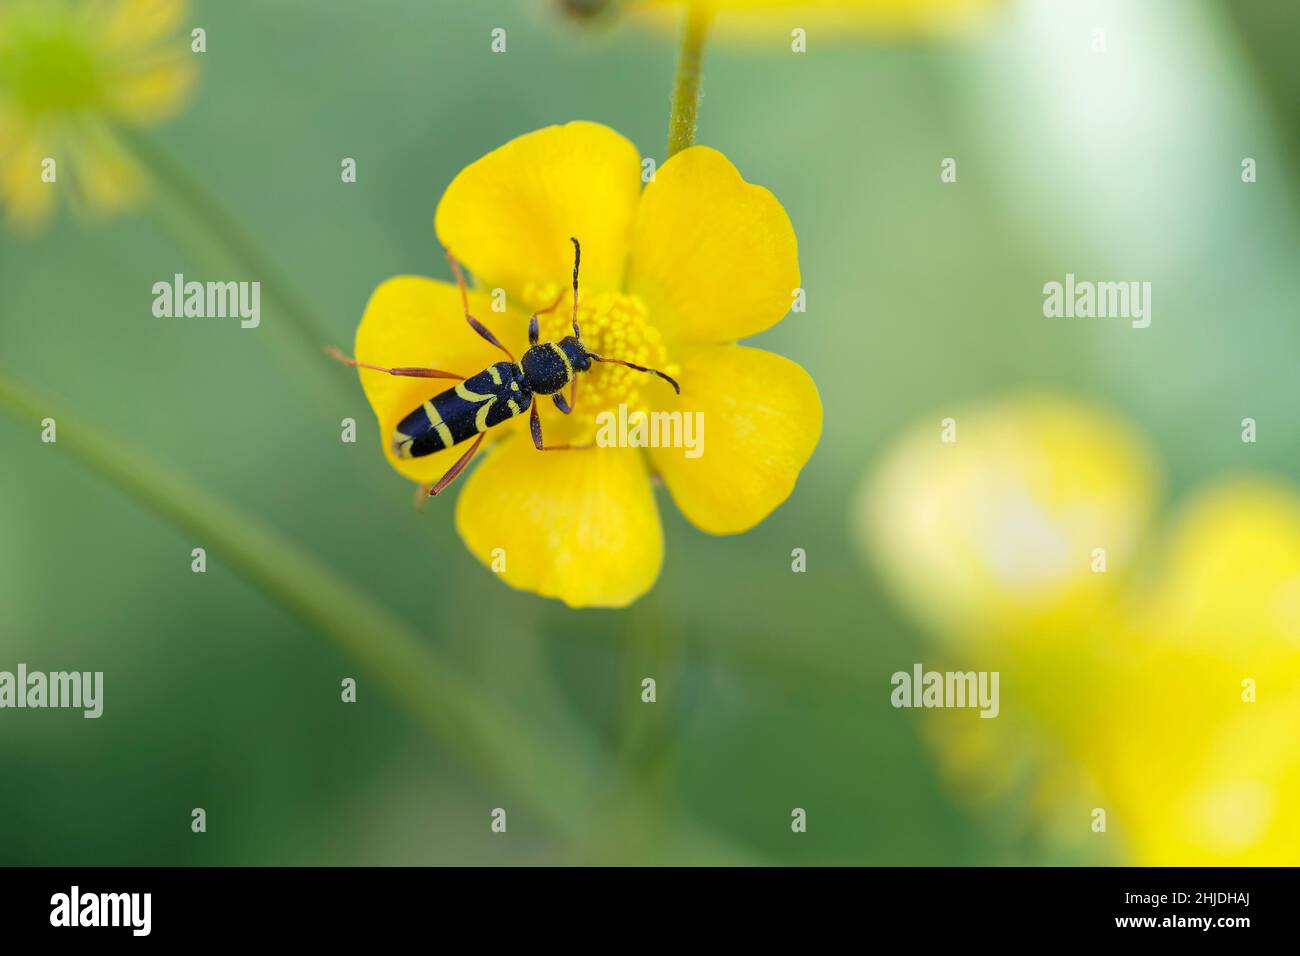 Longhorn beetle Clytus arietis sitting on a yellow flower Stock Photo